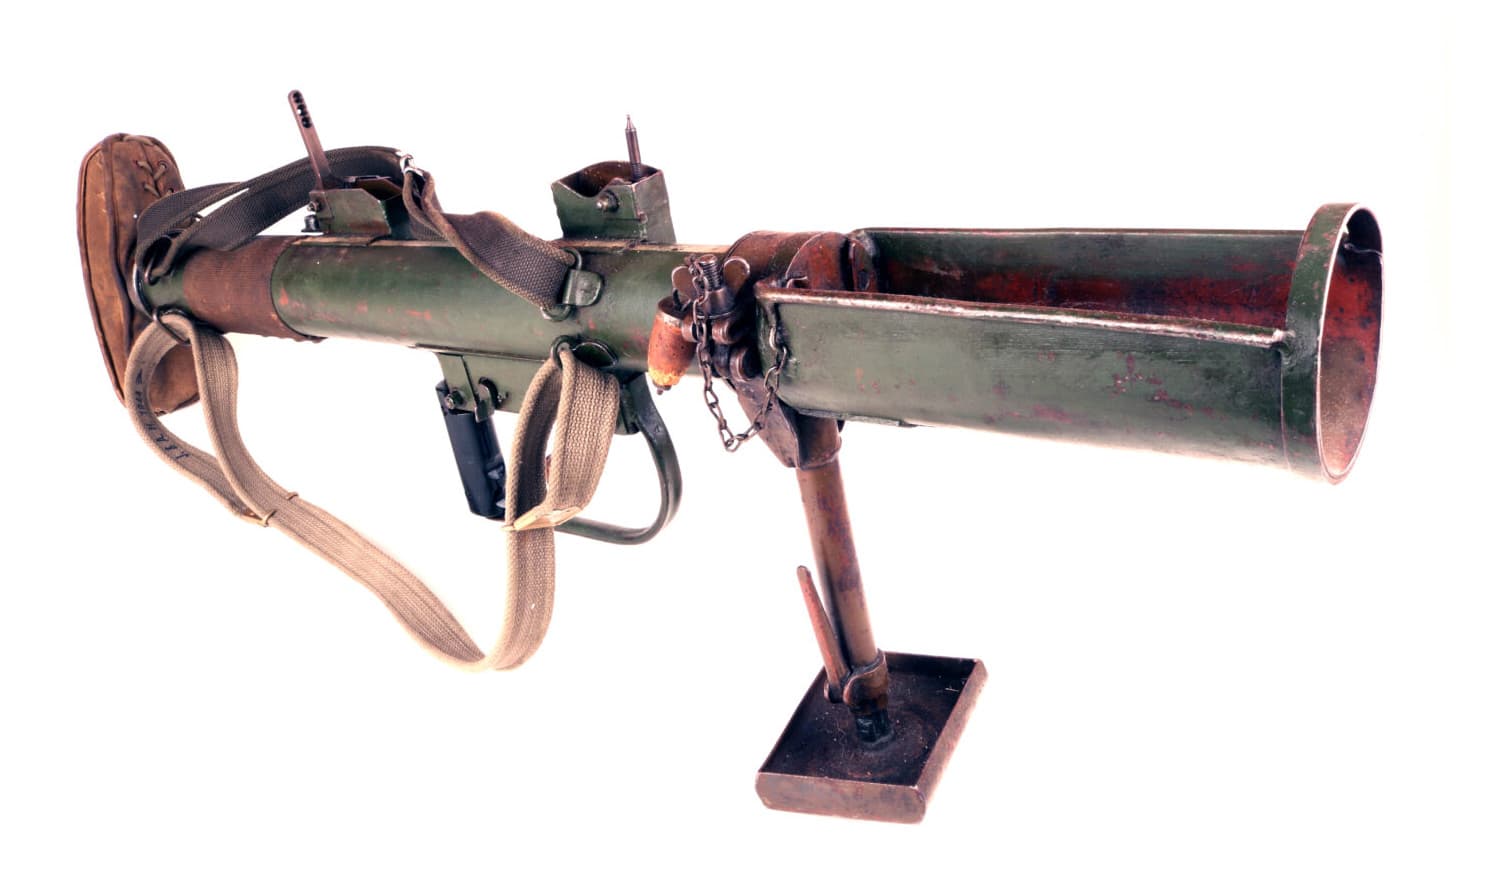 A British PIAT gun